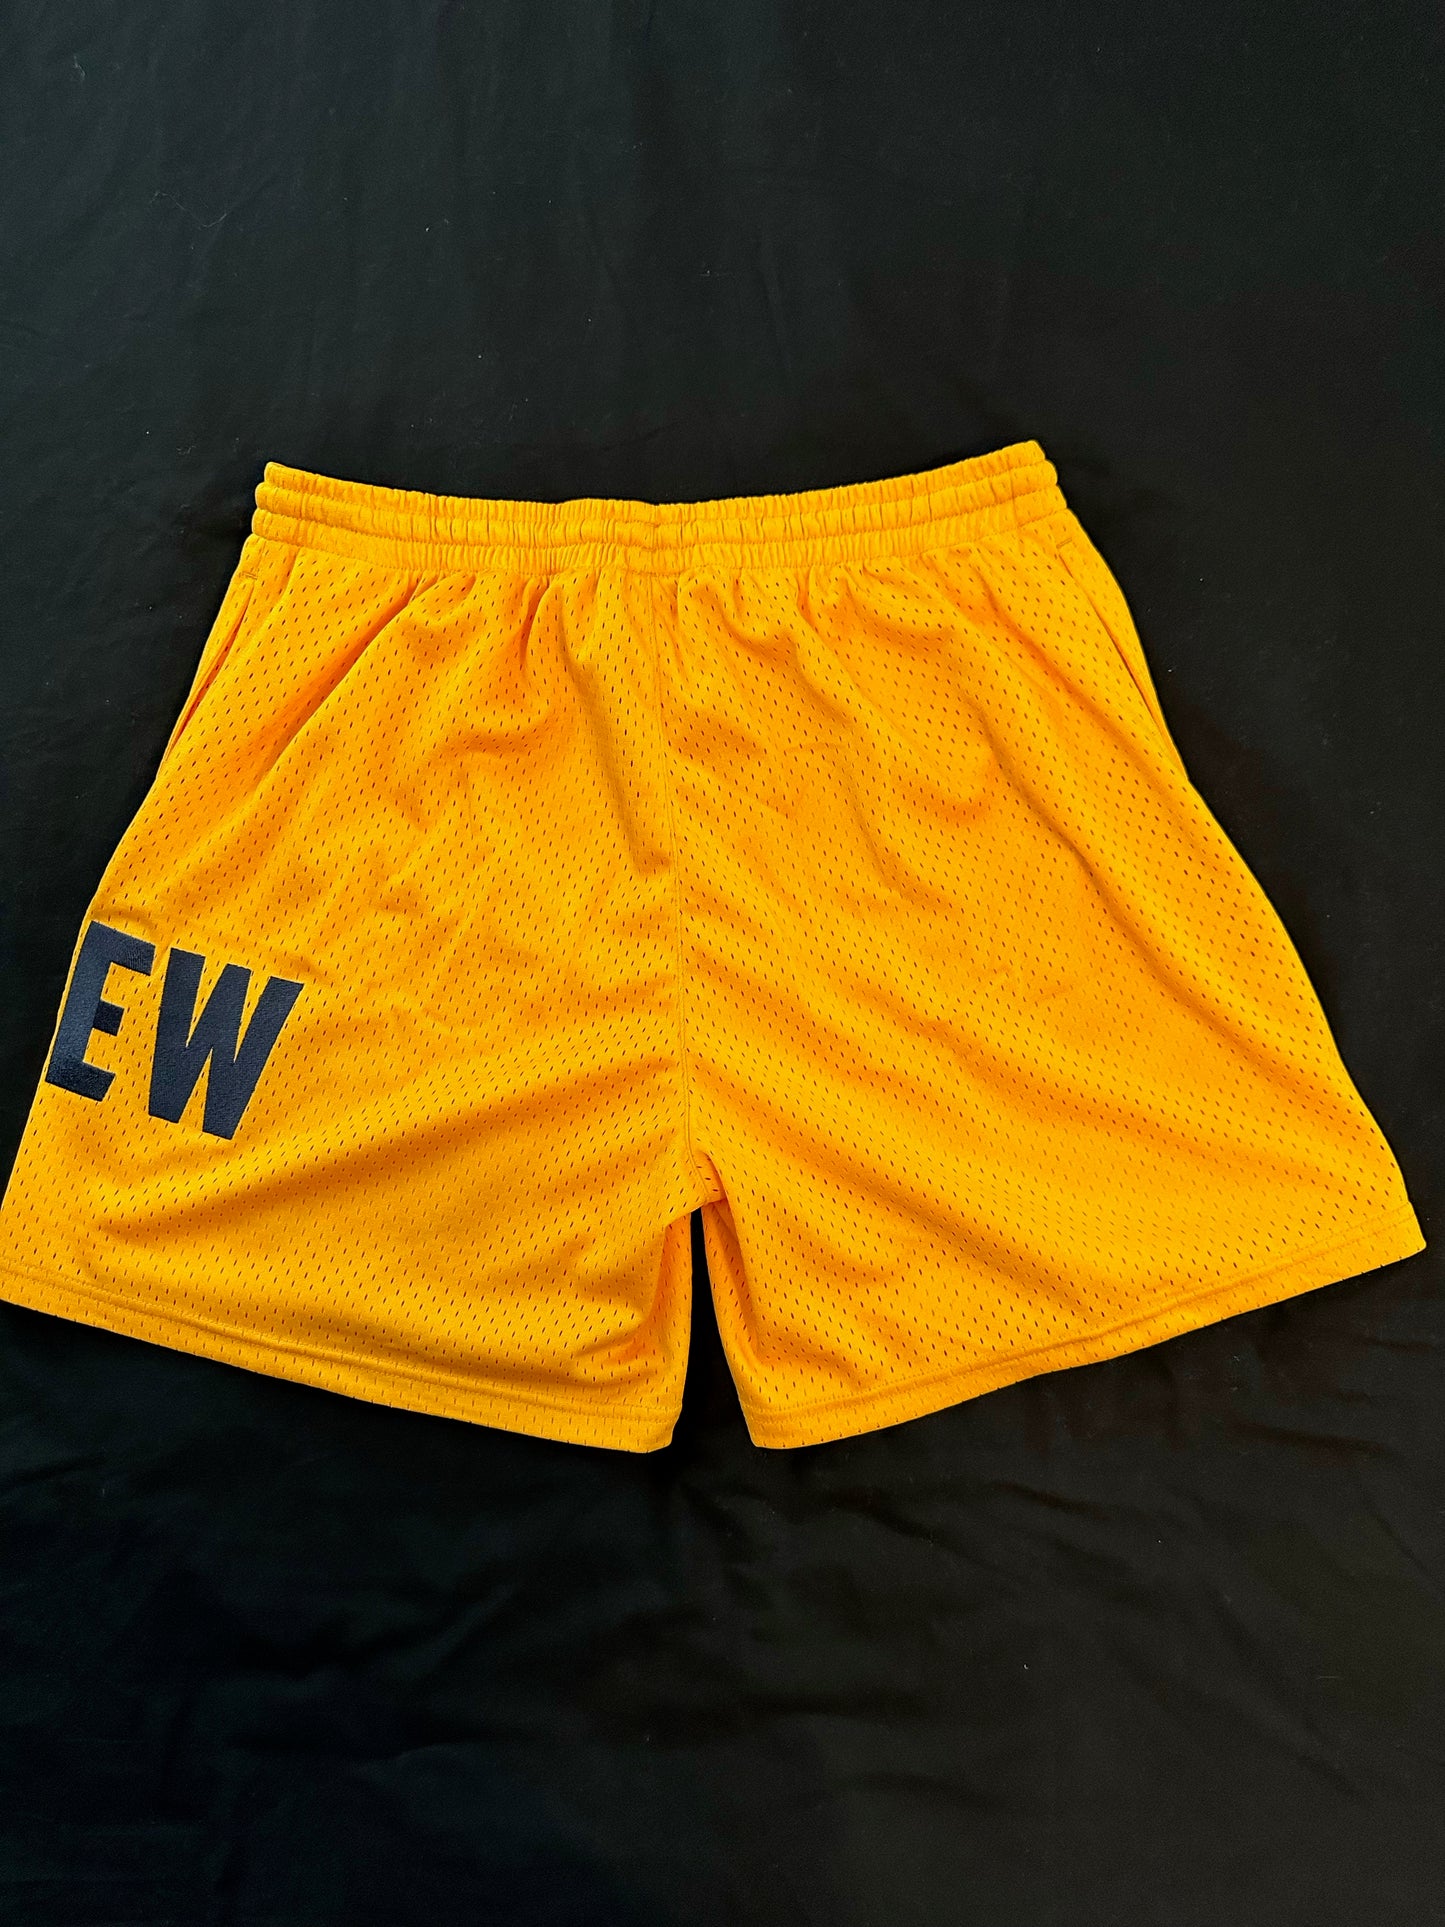 Purew Clothing Yellow Mesh Shorts